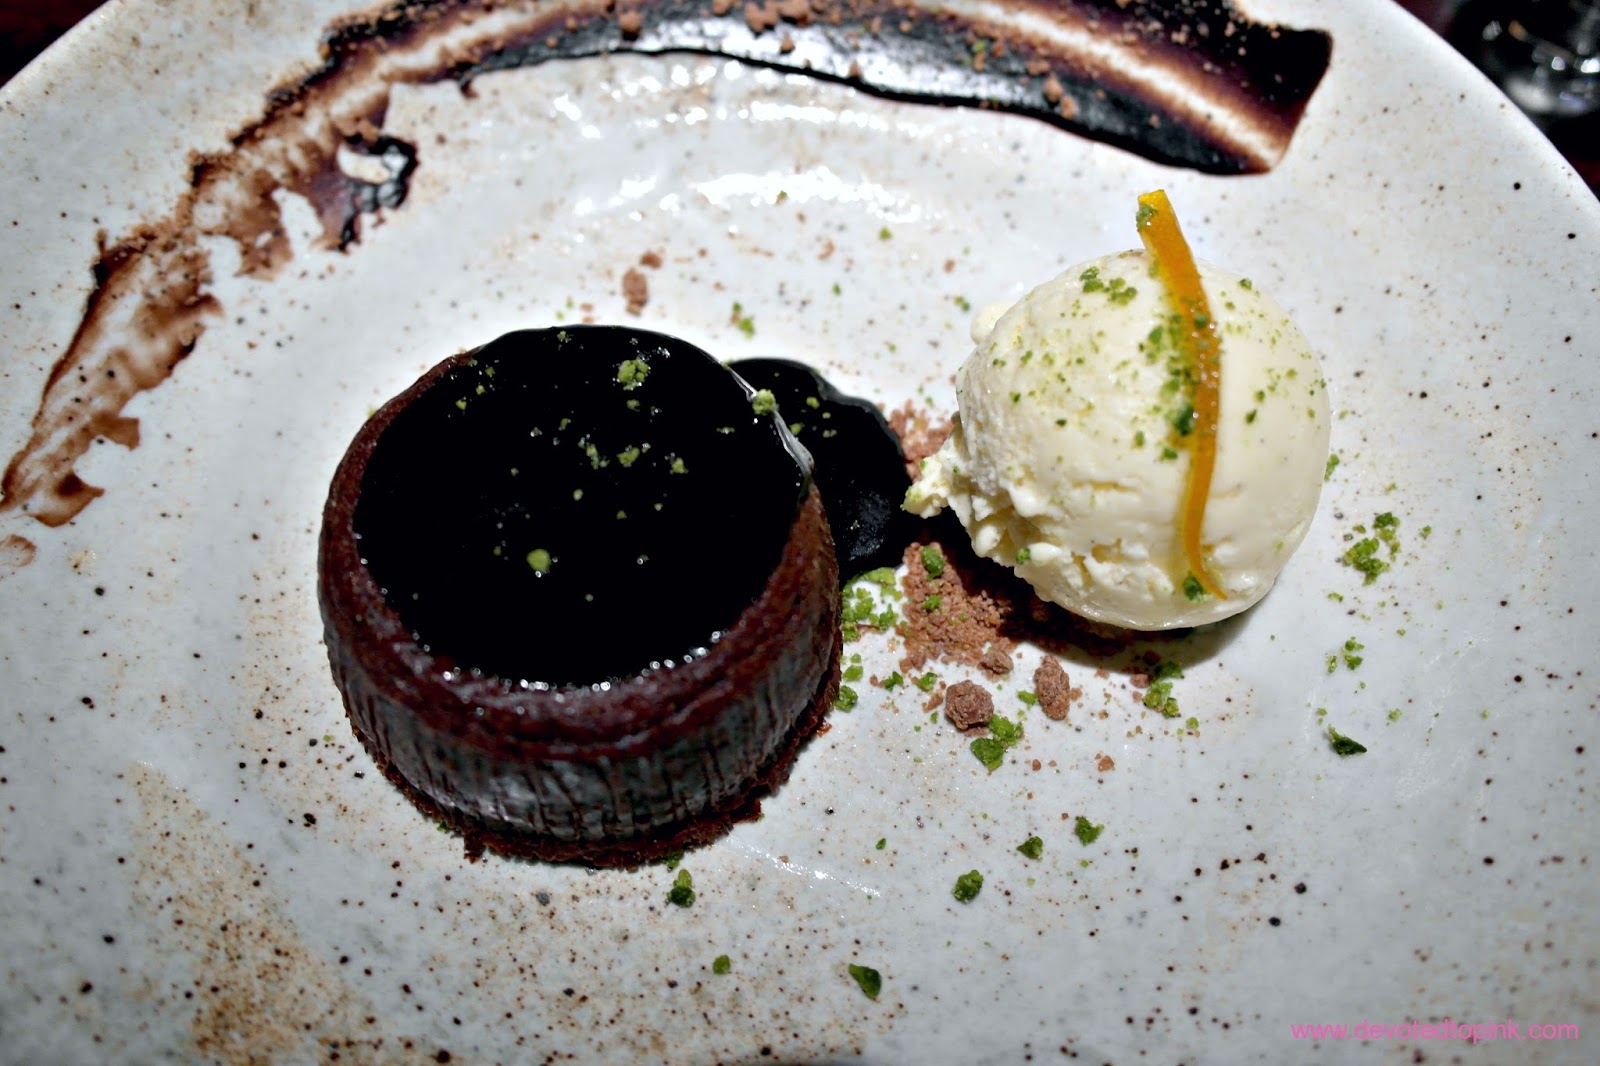 bottomless brunch, london, review, quaglinos, menu, dessert, chocolate